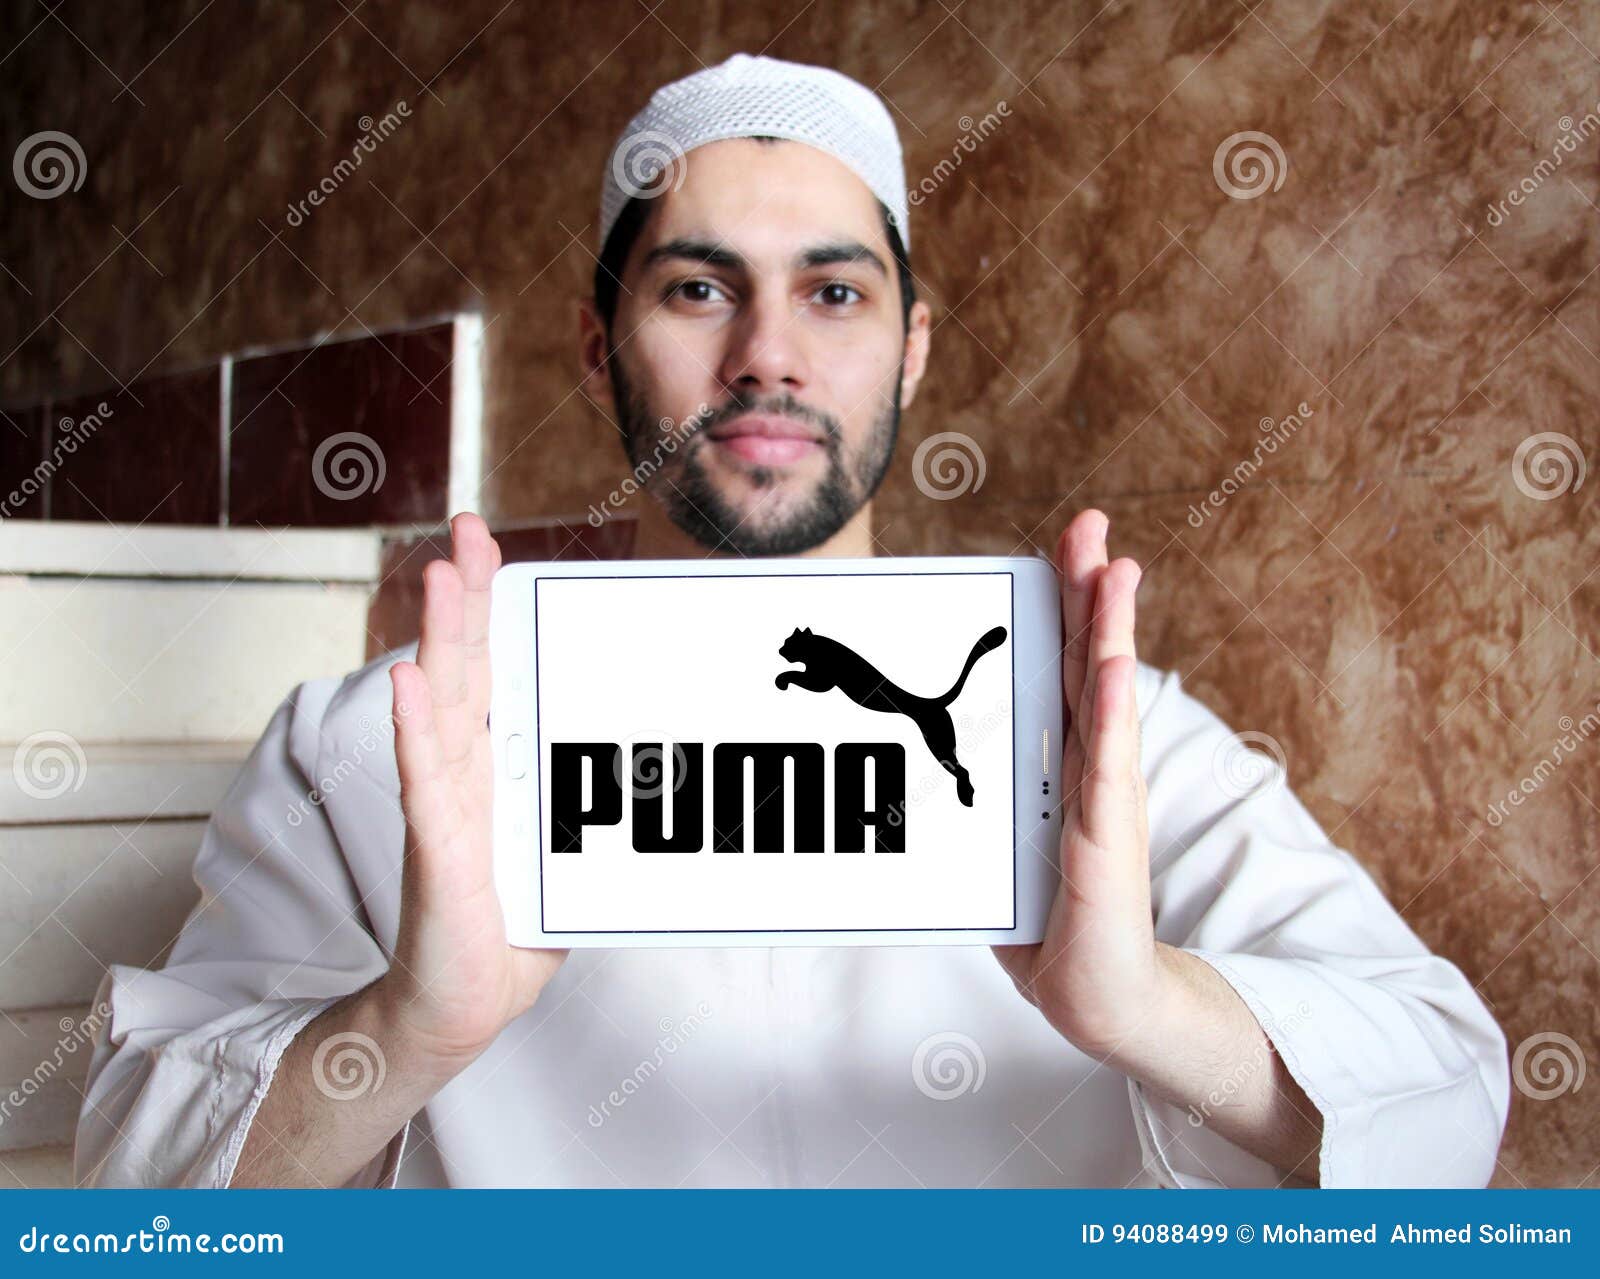 puma sports company